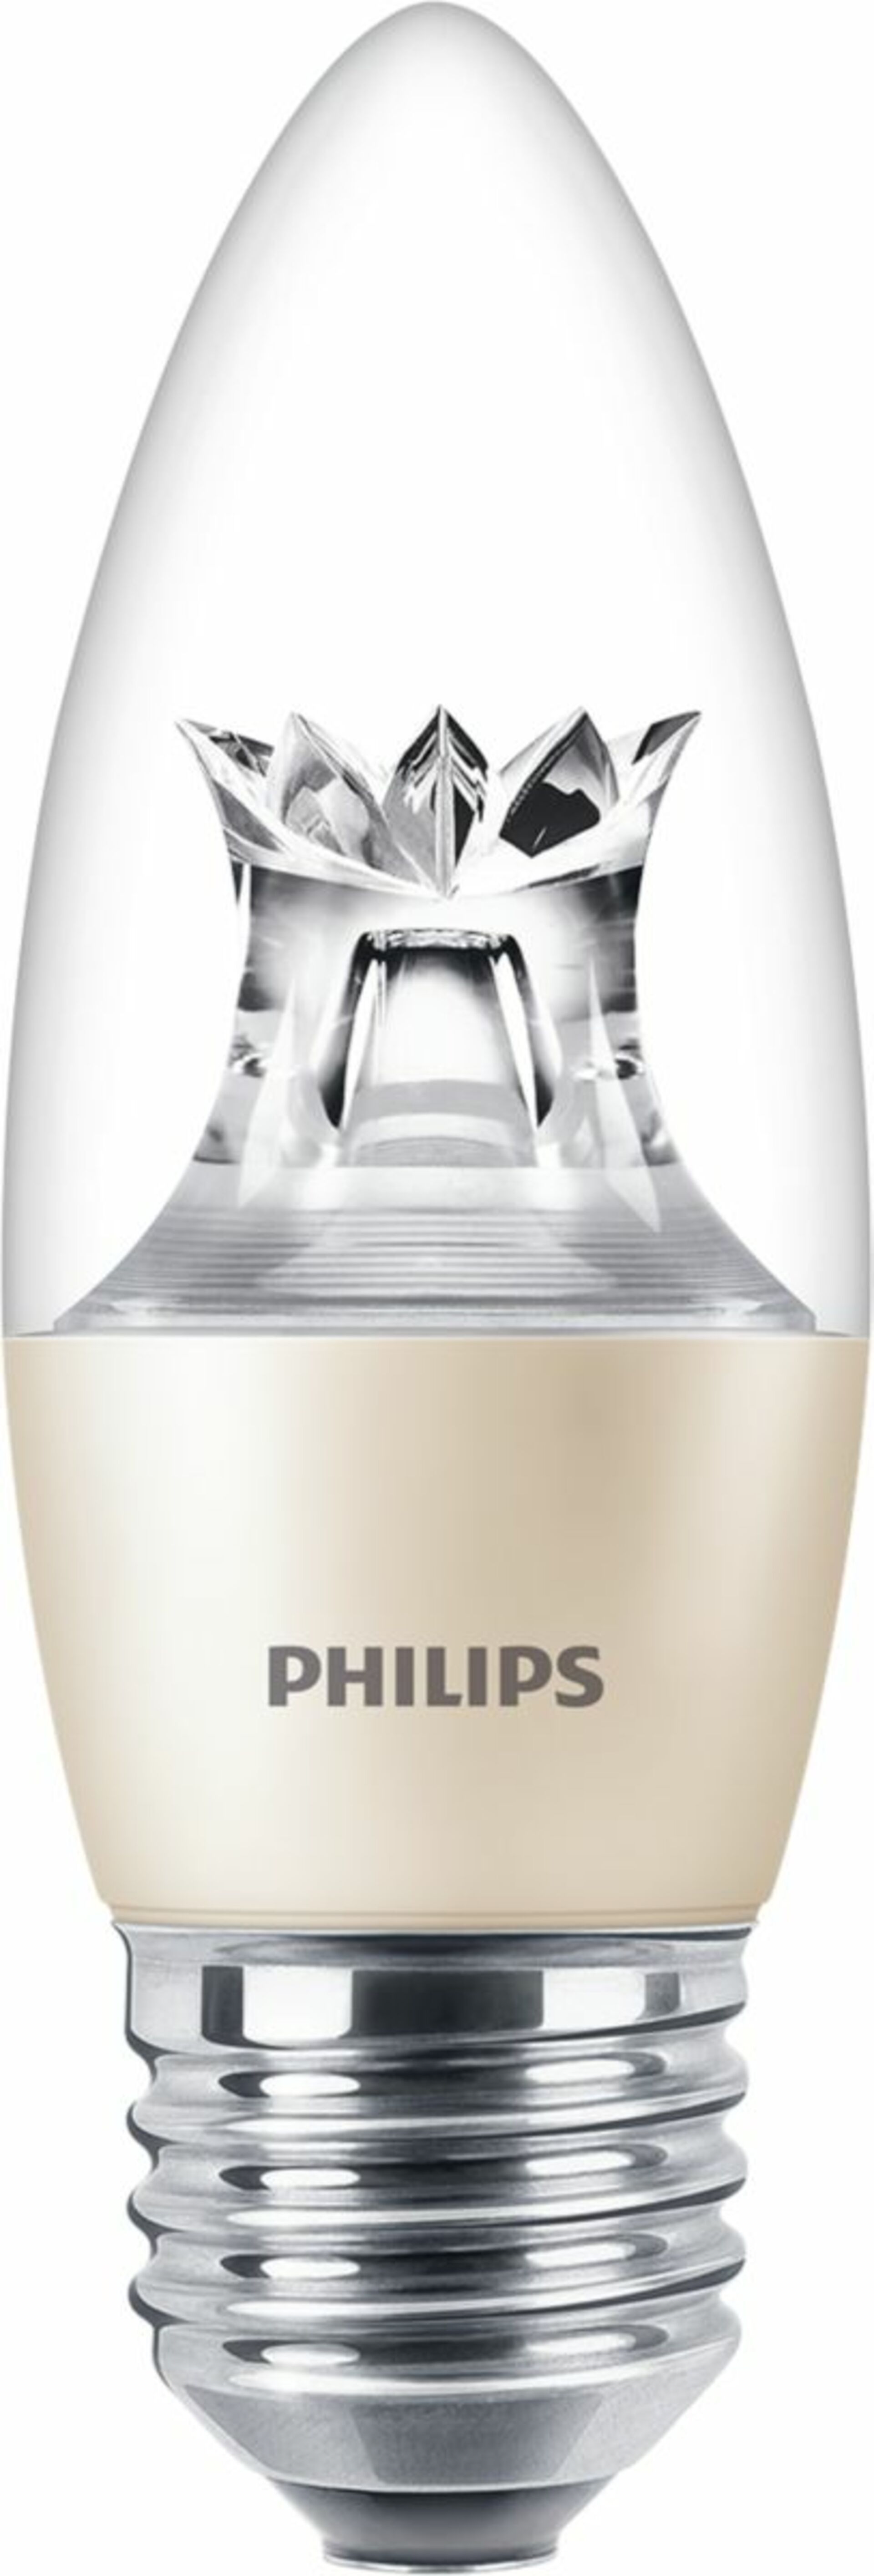 Philips MASTER LEDcandle DT 5.5-40W E27 B38 CLEAR